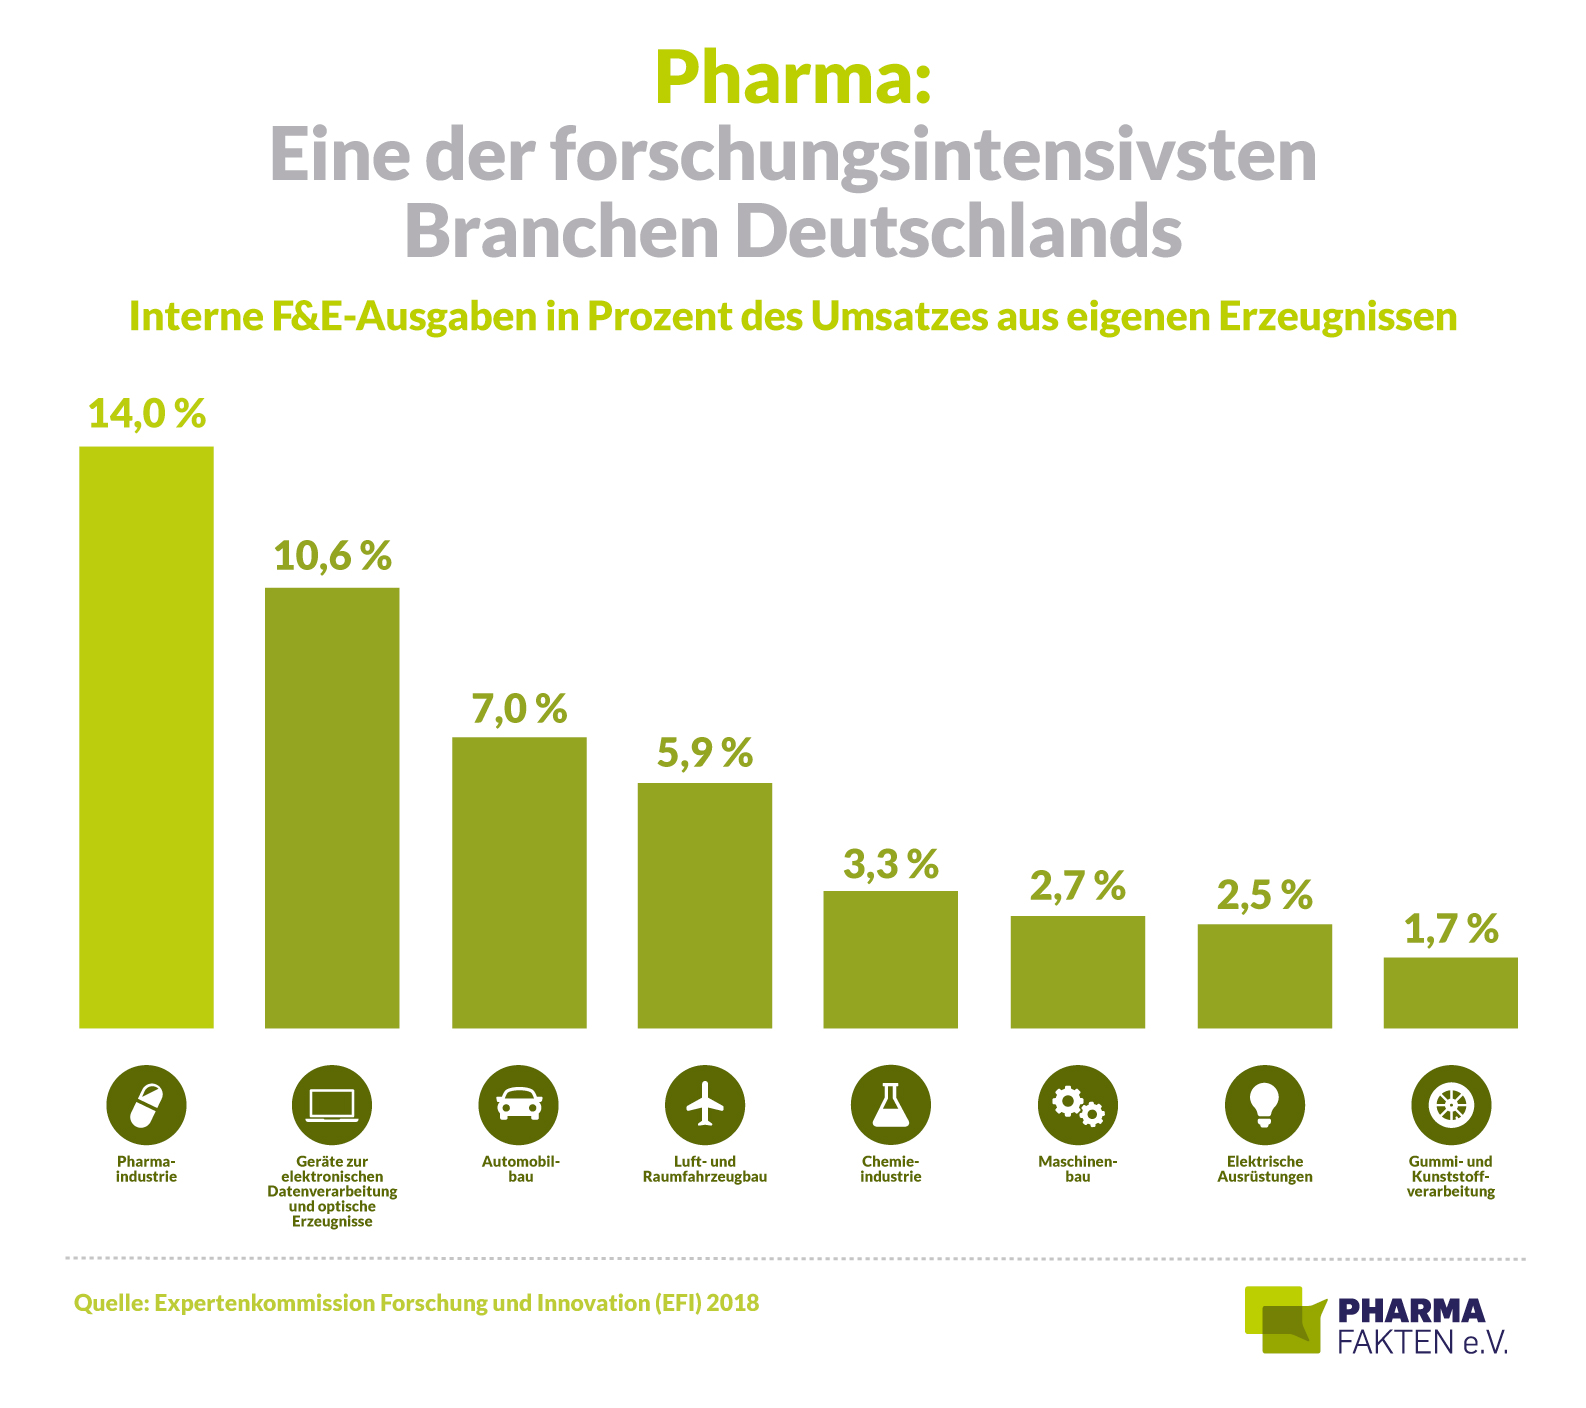 Pharma Fakten-Grafik: Pharmaindustrie ist eine der forschungsintensivsten Branchen